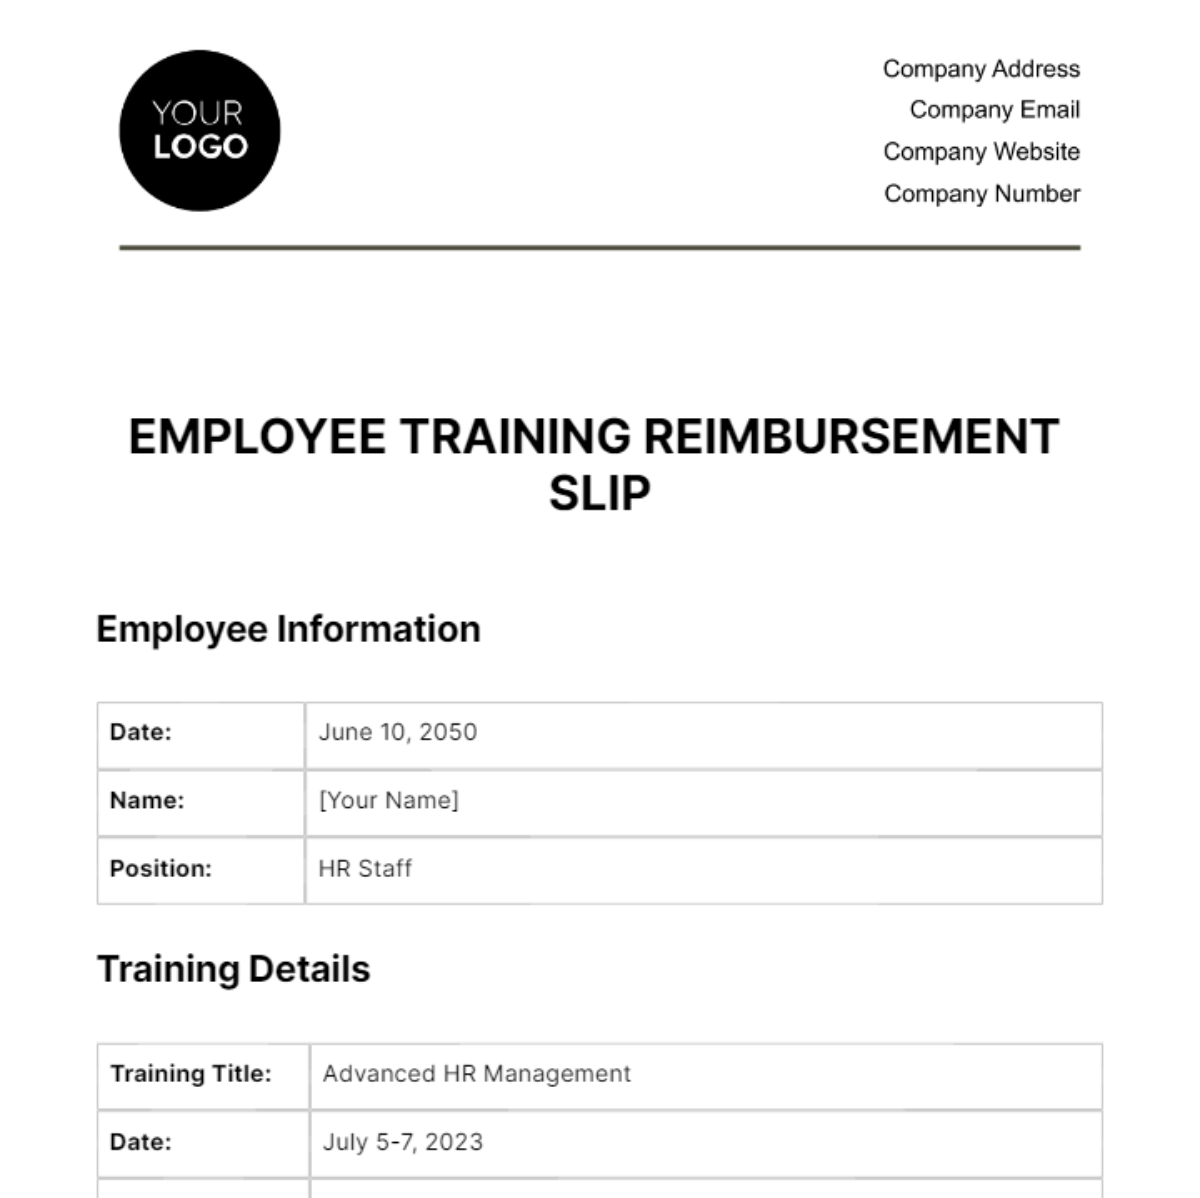 Employee Training Reimbursement Slip HR Template